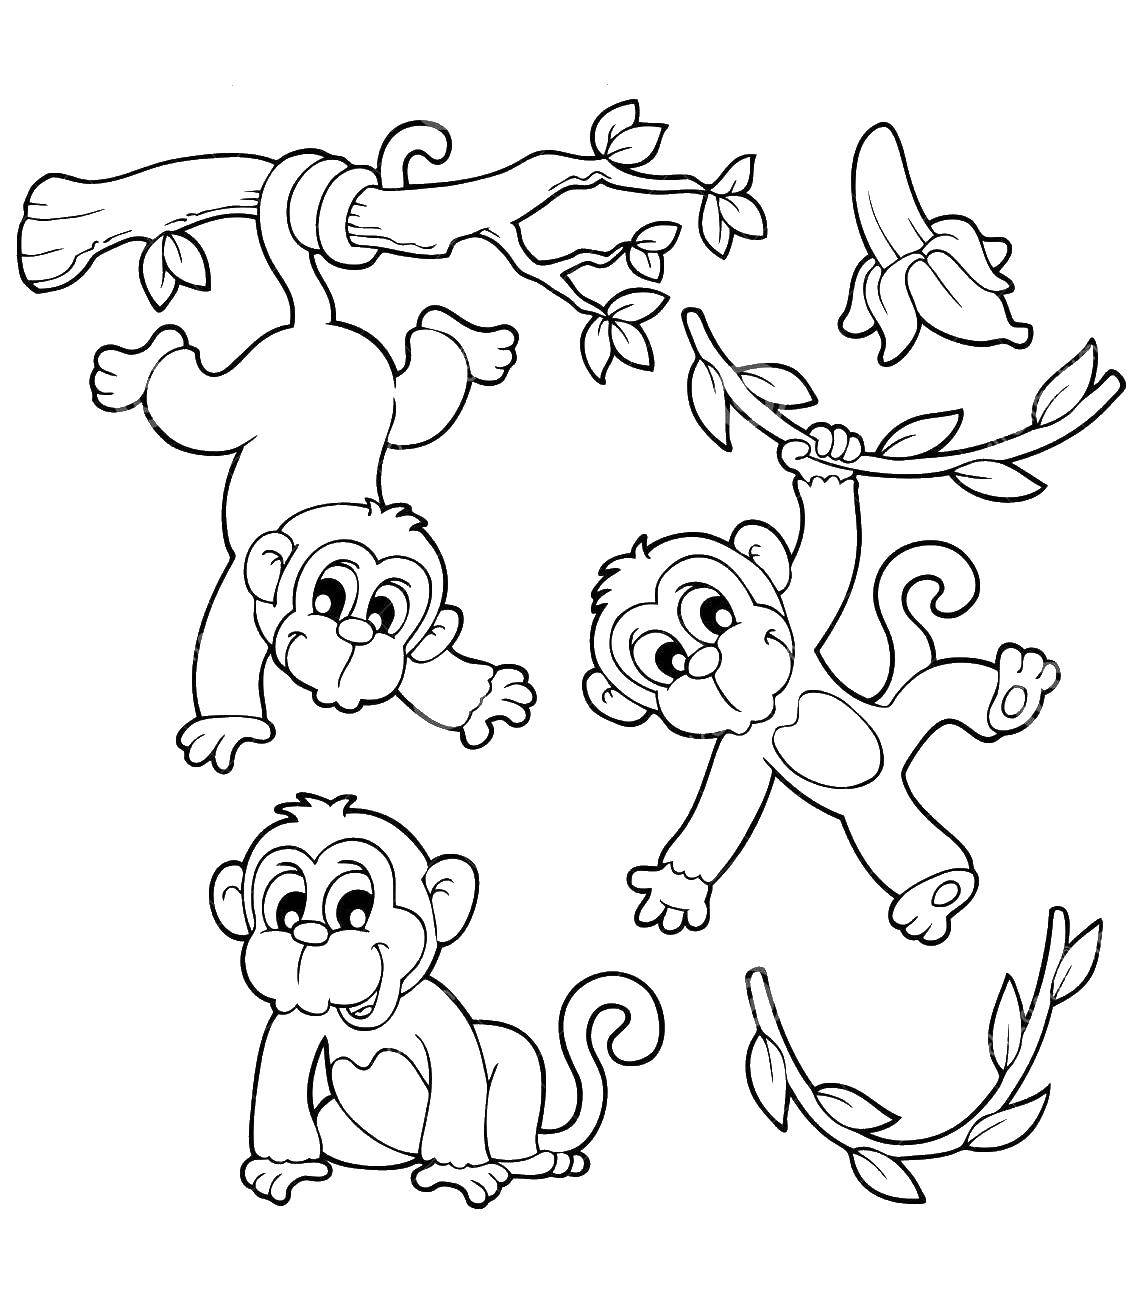 Coloring Monkeys jumping. Category APE. Tags:  the monkey, banana.